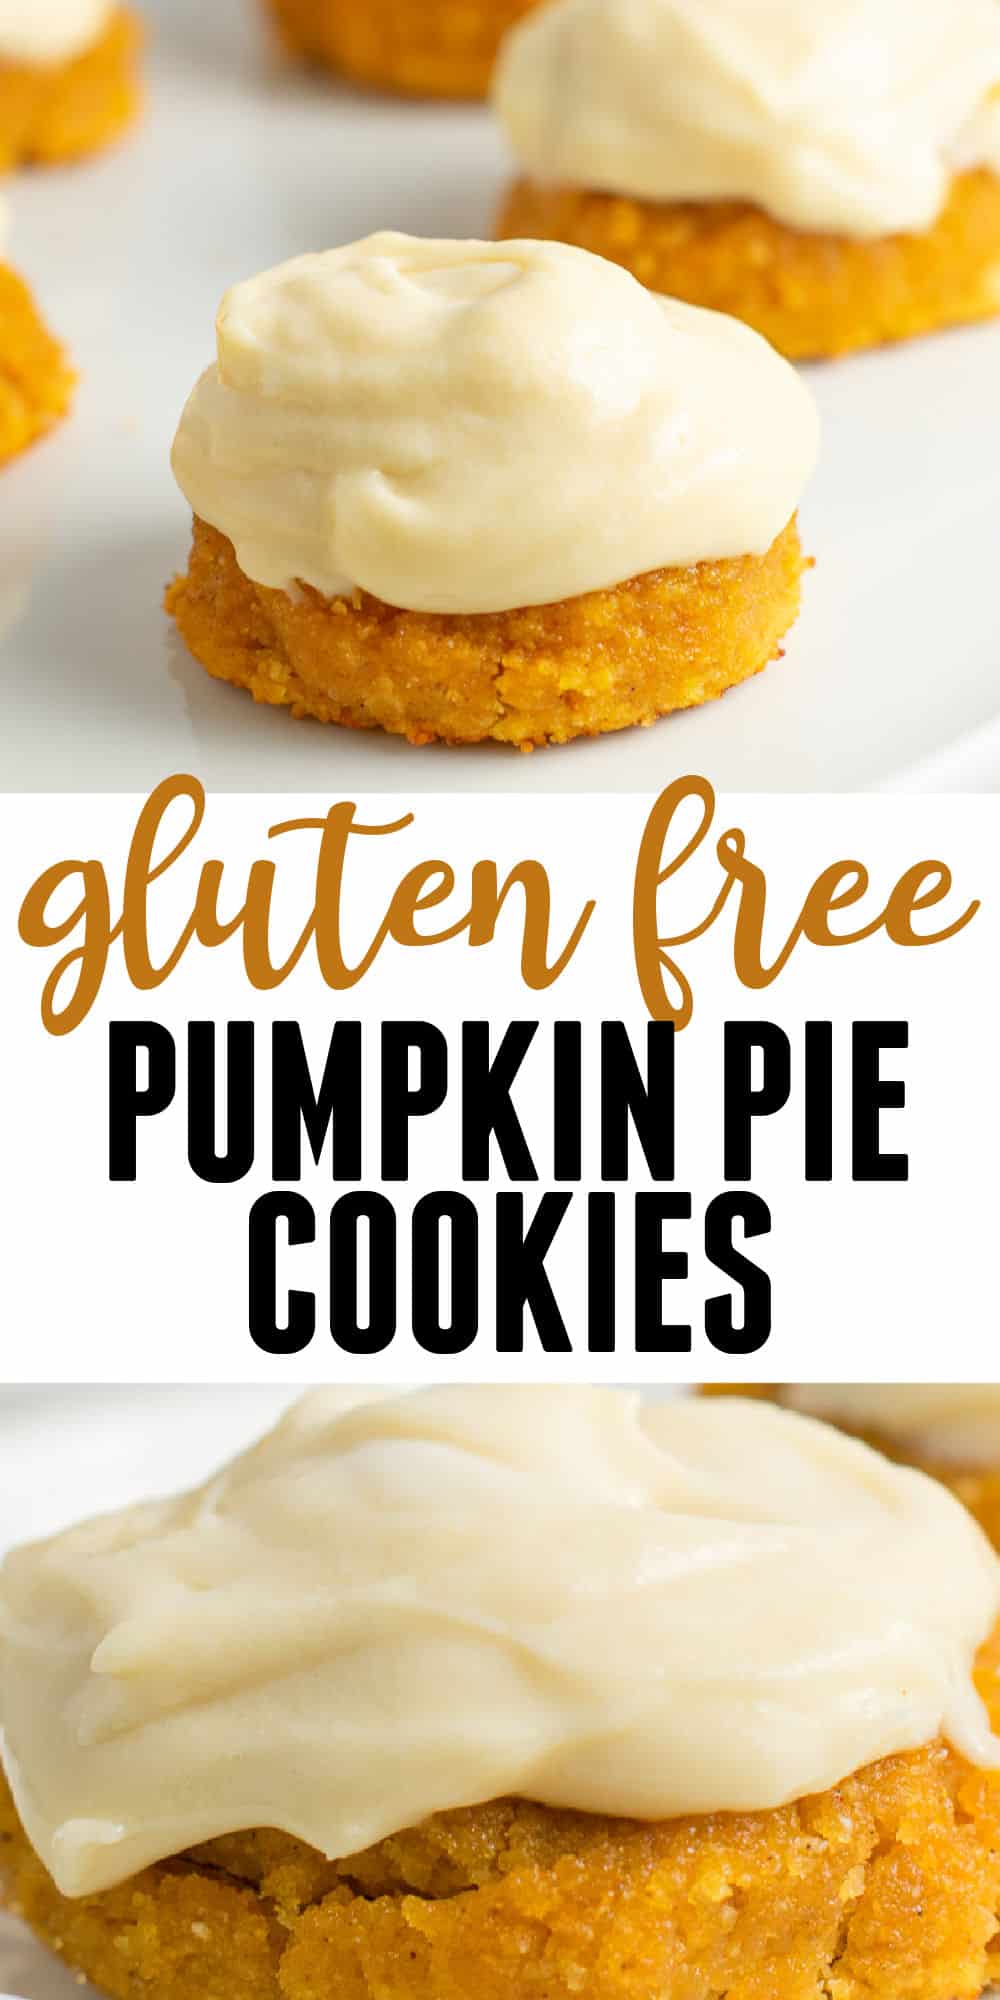 image with text "gluten free pumpkin pie cookies"